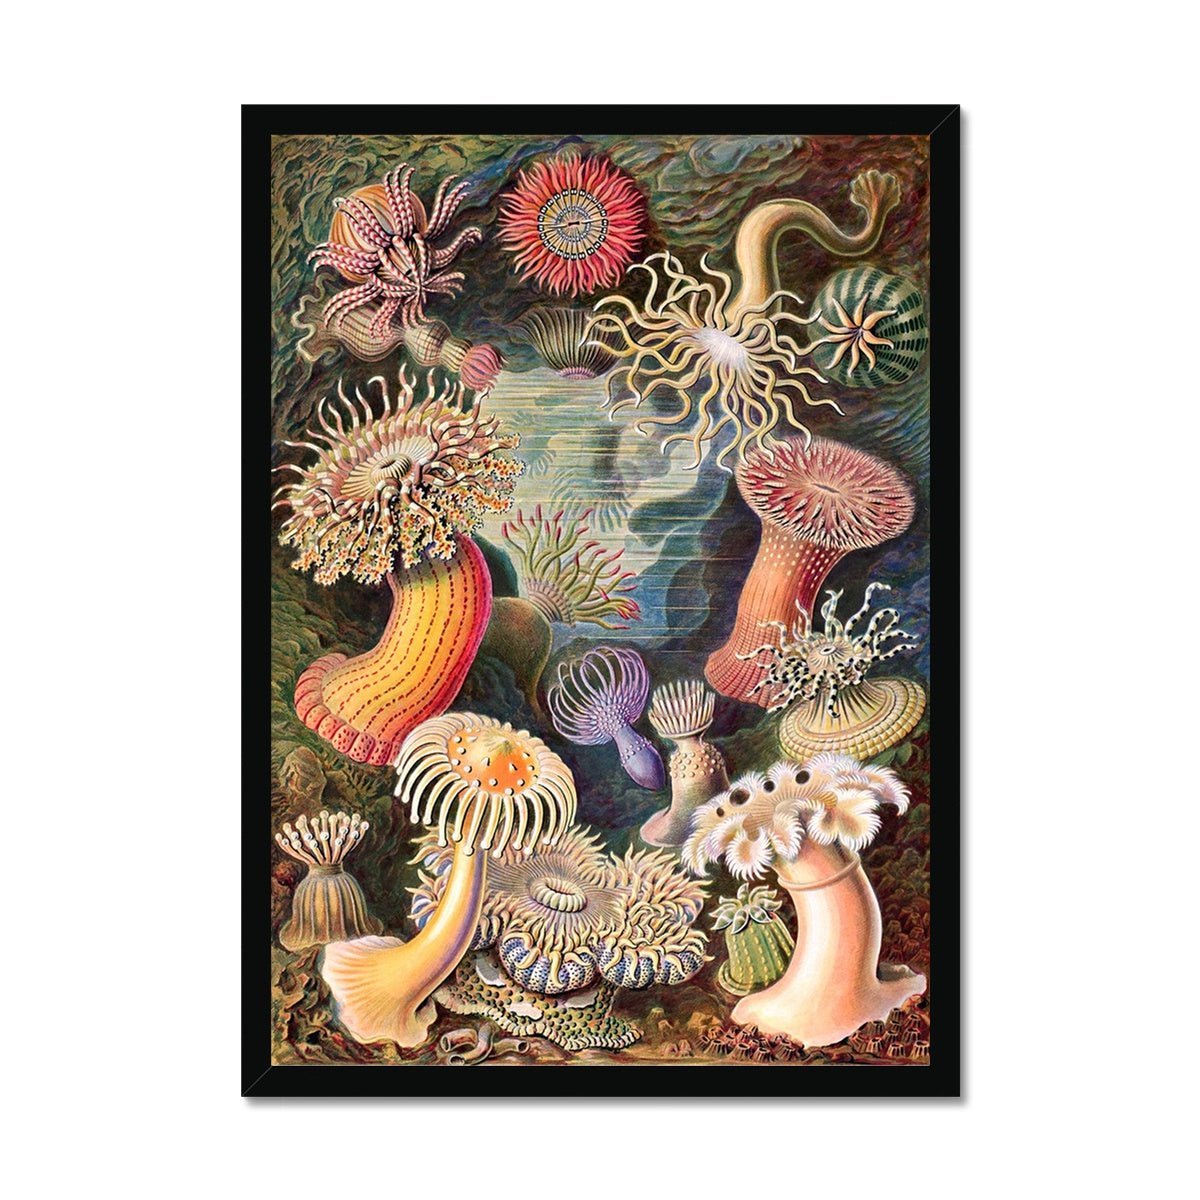 Framed Print 6"x8" / Black Frame Framed Ernst Haeckel Actiniae Sea Anemones Marine Life | Sea Life, Ocean Home Decor | Natural History Vintage Evolution Framed Art Print